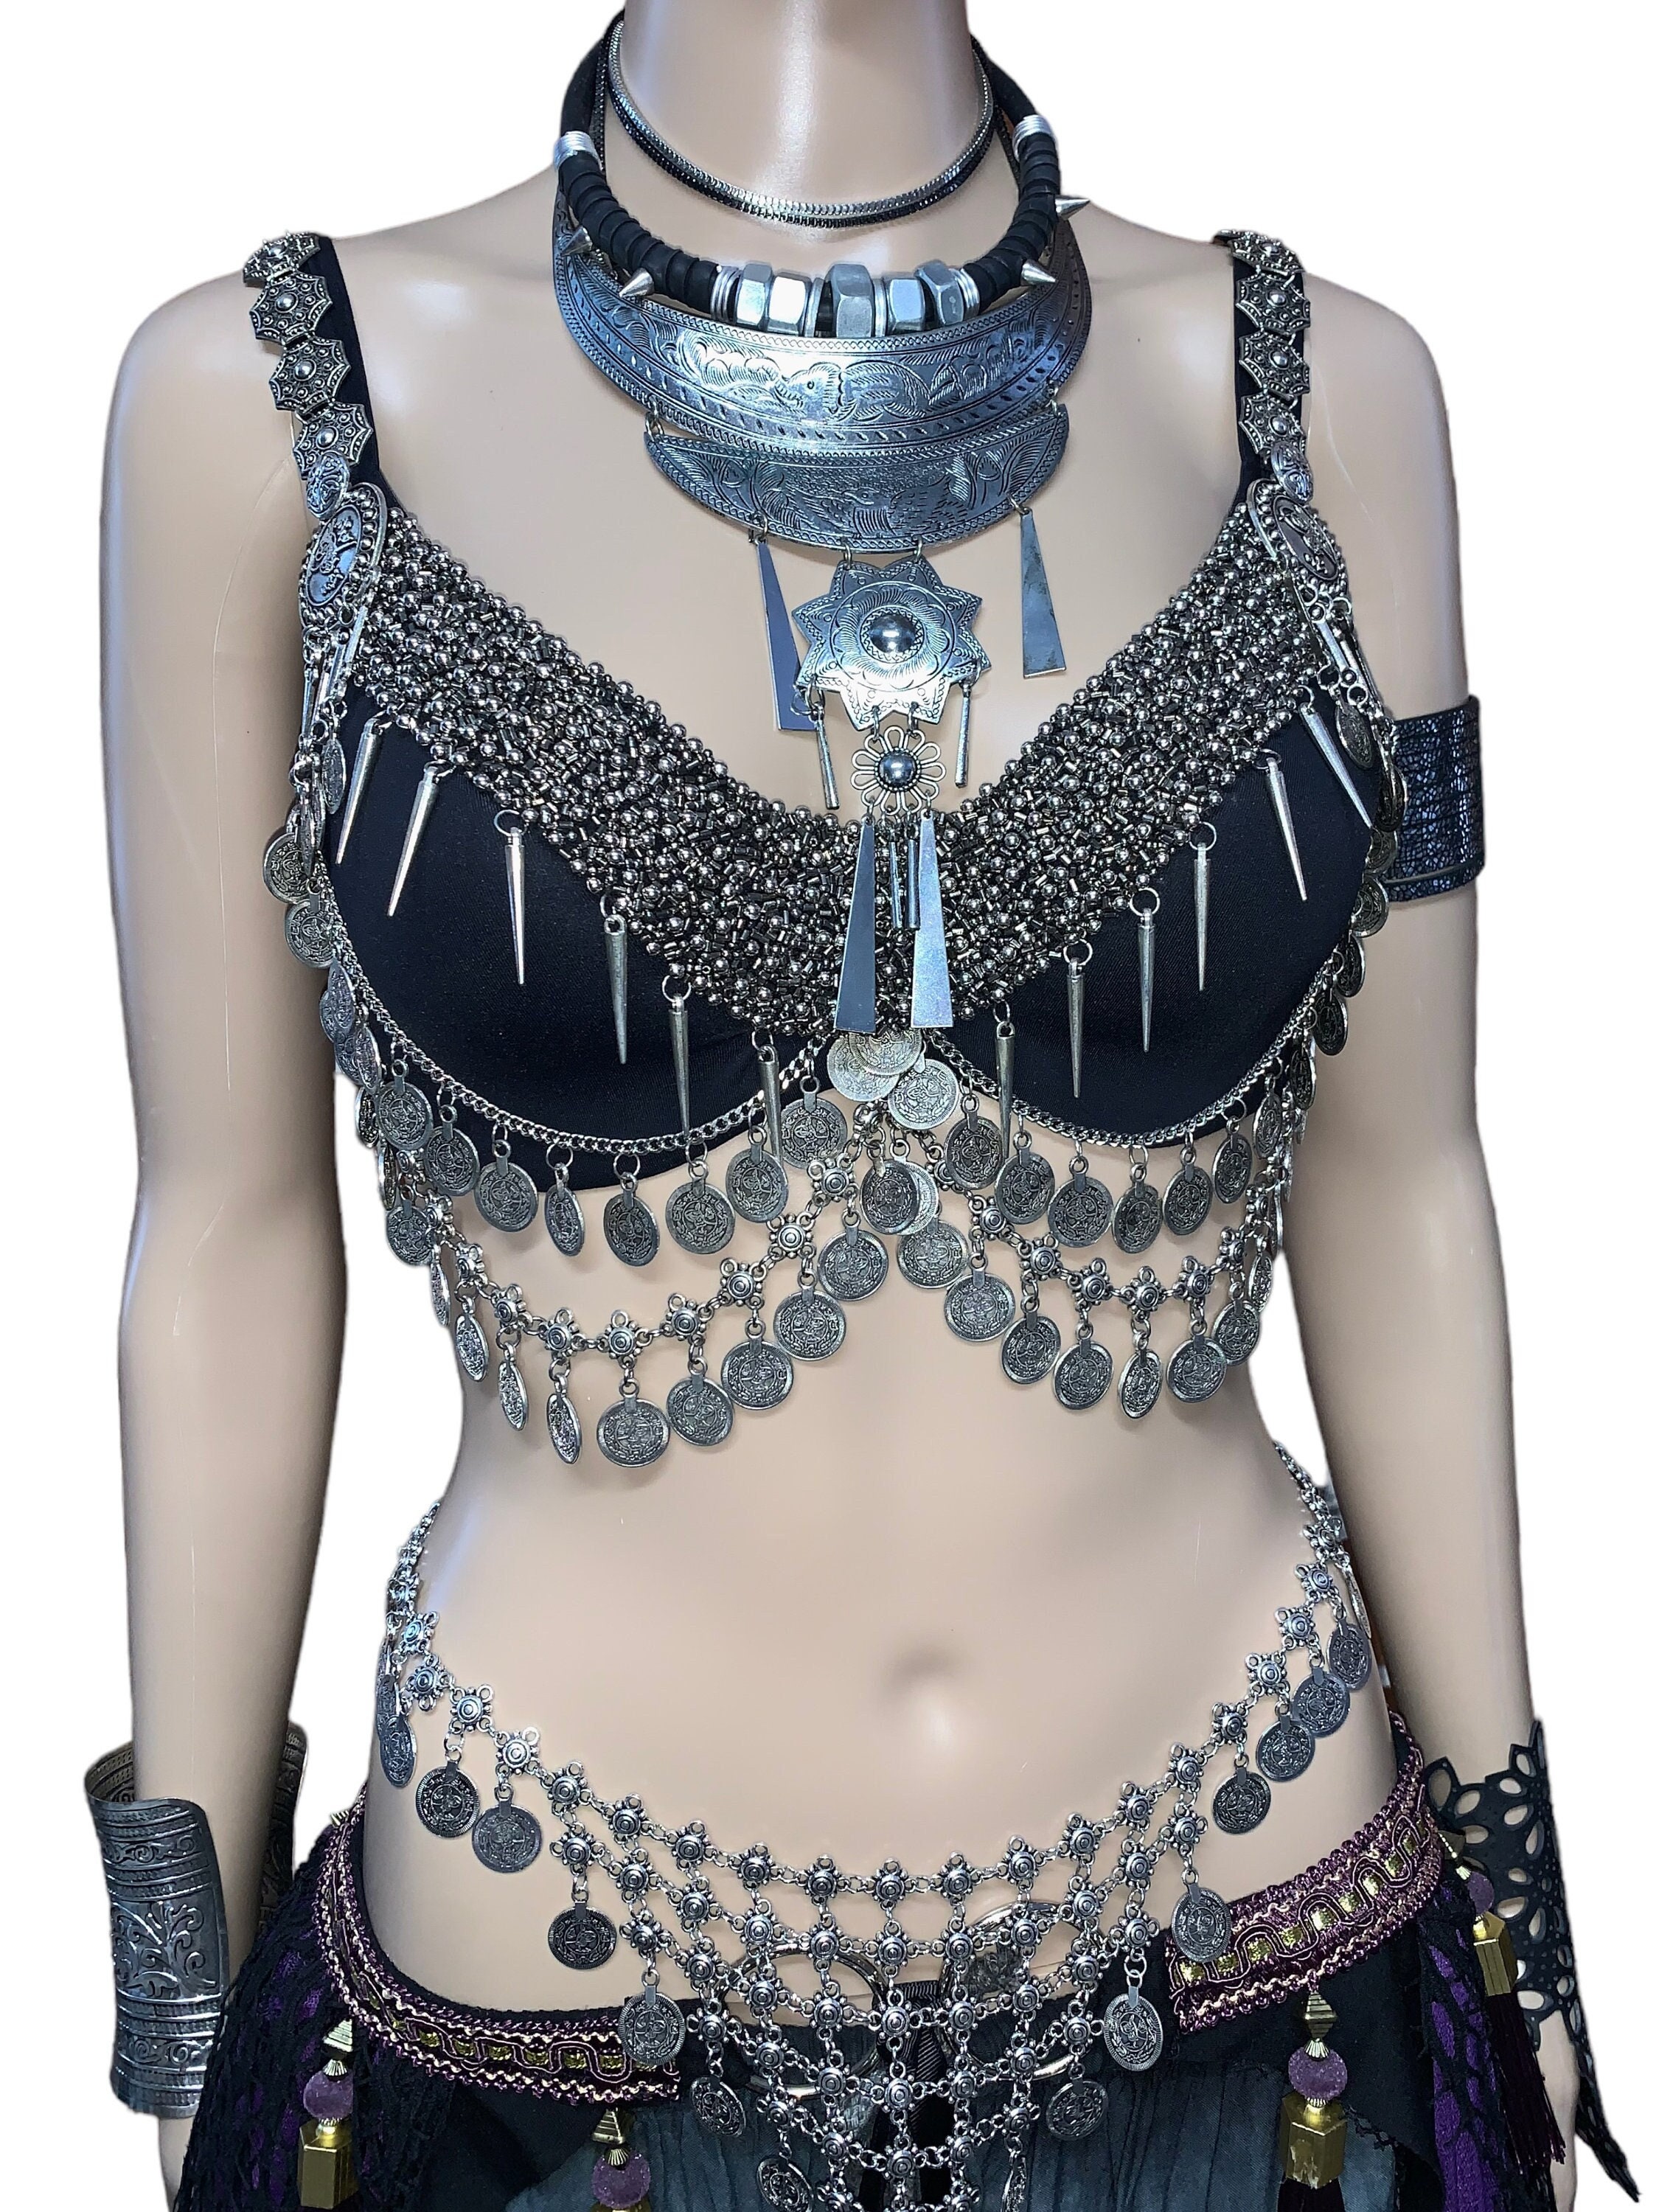 Tribal Fusion Bra, 34 B, Belly Dance Costume, Beaded Halter Top